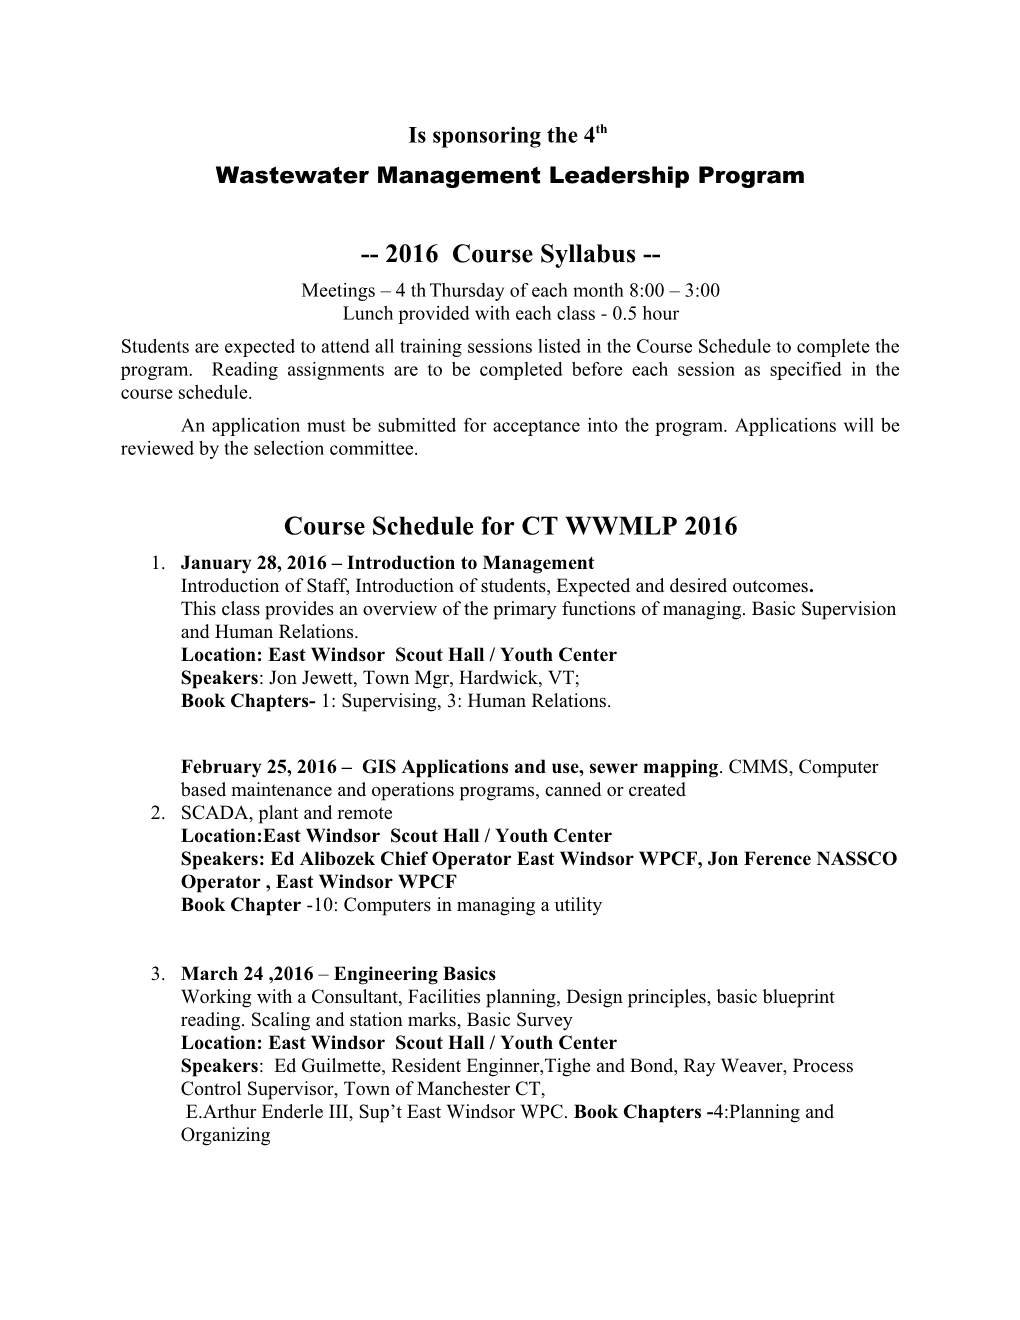 Wastewater Management Leadership Program